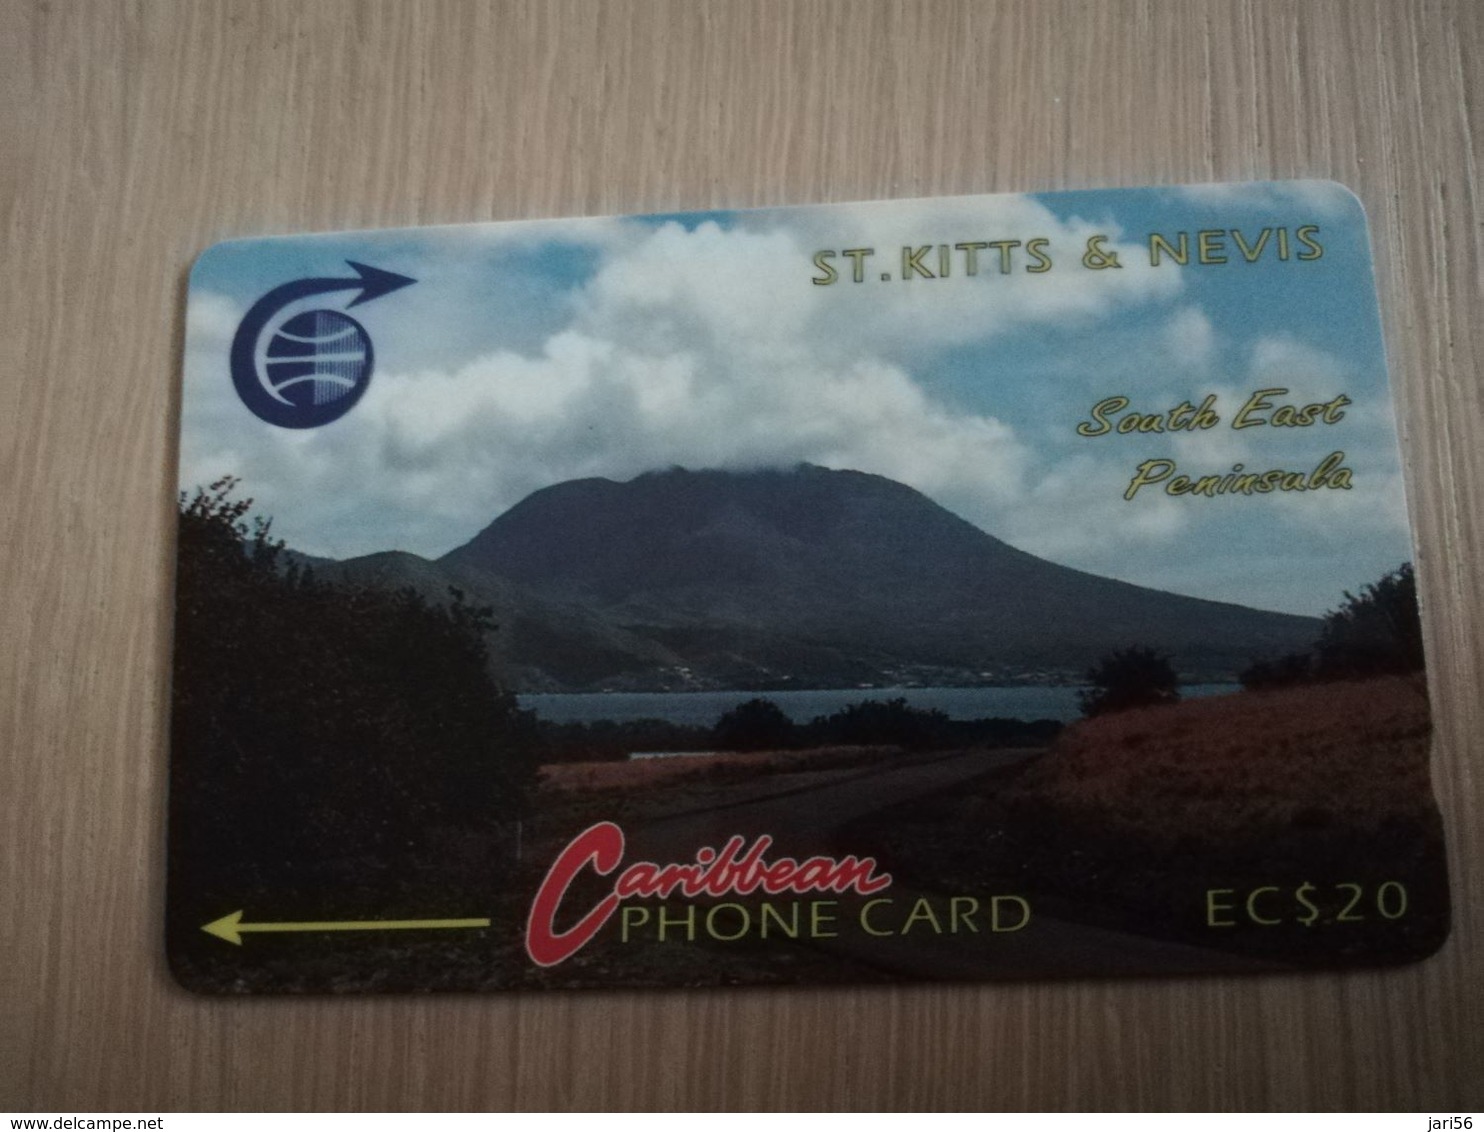 ST KITTS & NEVIS   GPT CARD $20,-   3CSKD     NO STK-3D   SOUTH EAST PENINSULA 2    Fine Used Card  **2331** - St. Kitts En Nevis